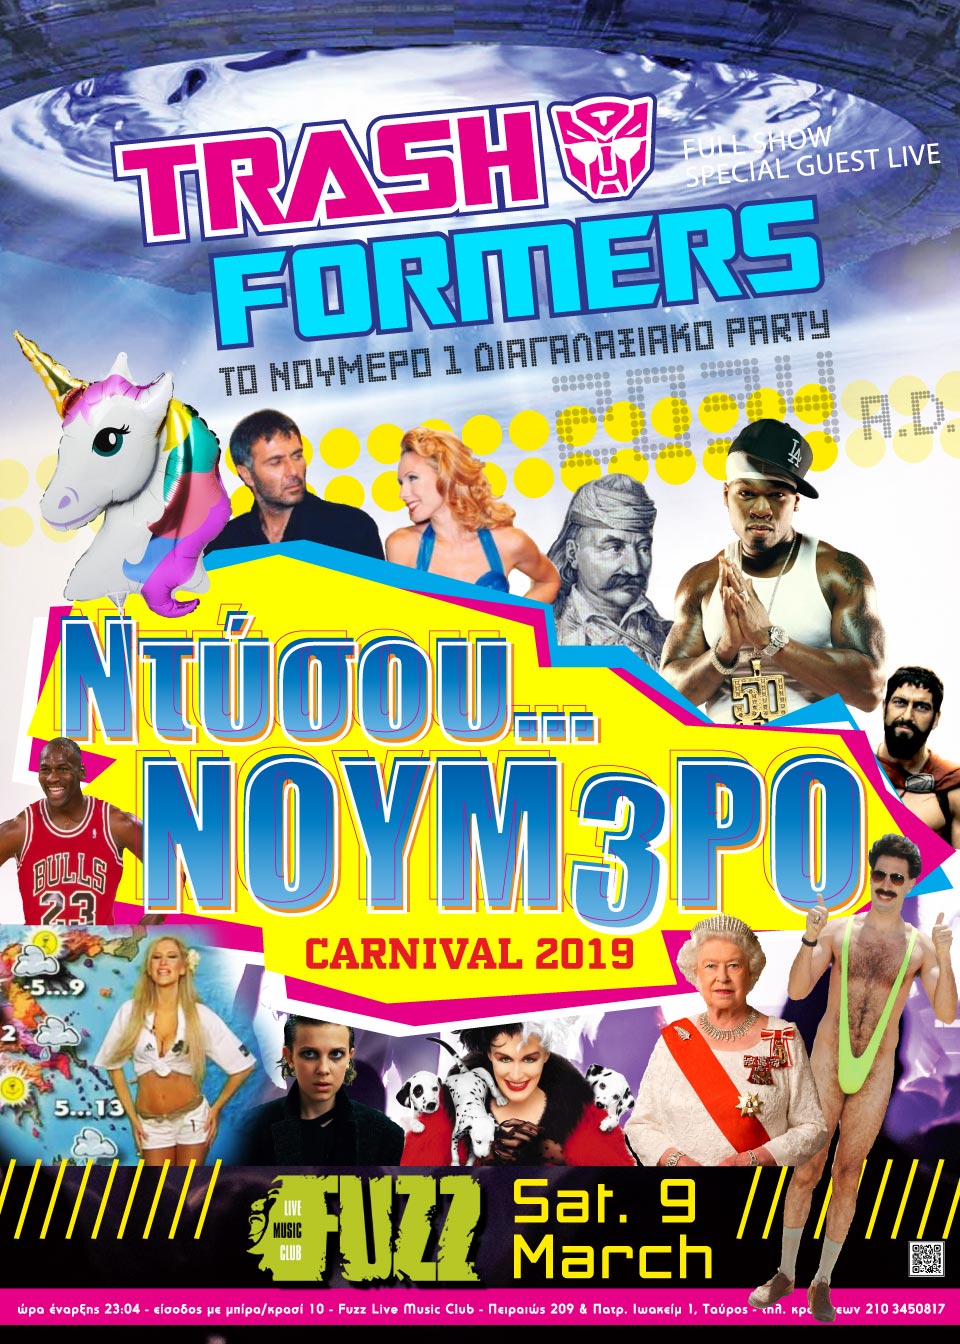 Trashformers Carnival 2019 - Ντύσου Νούμερο